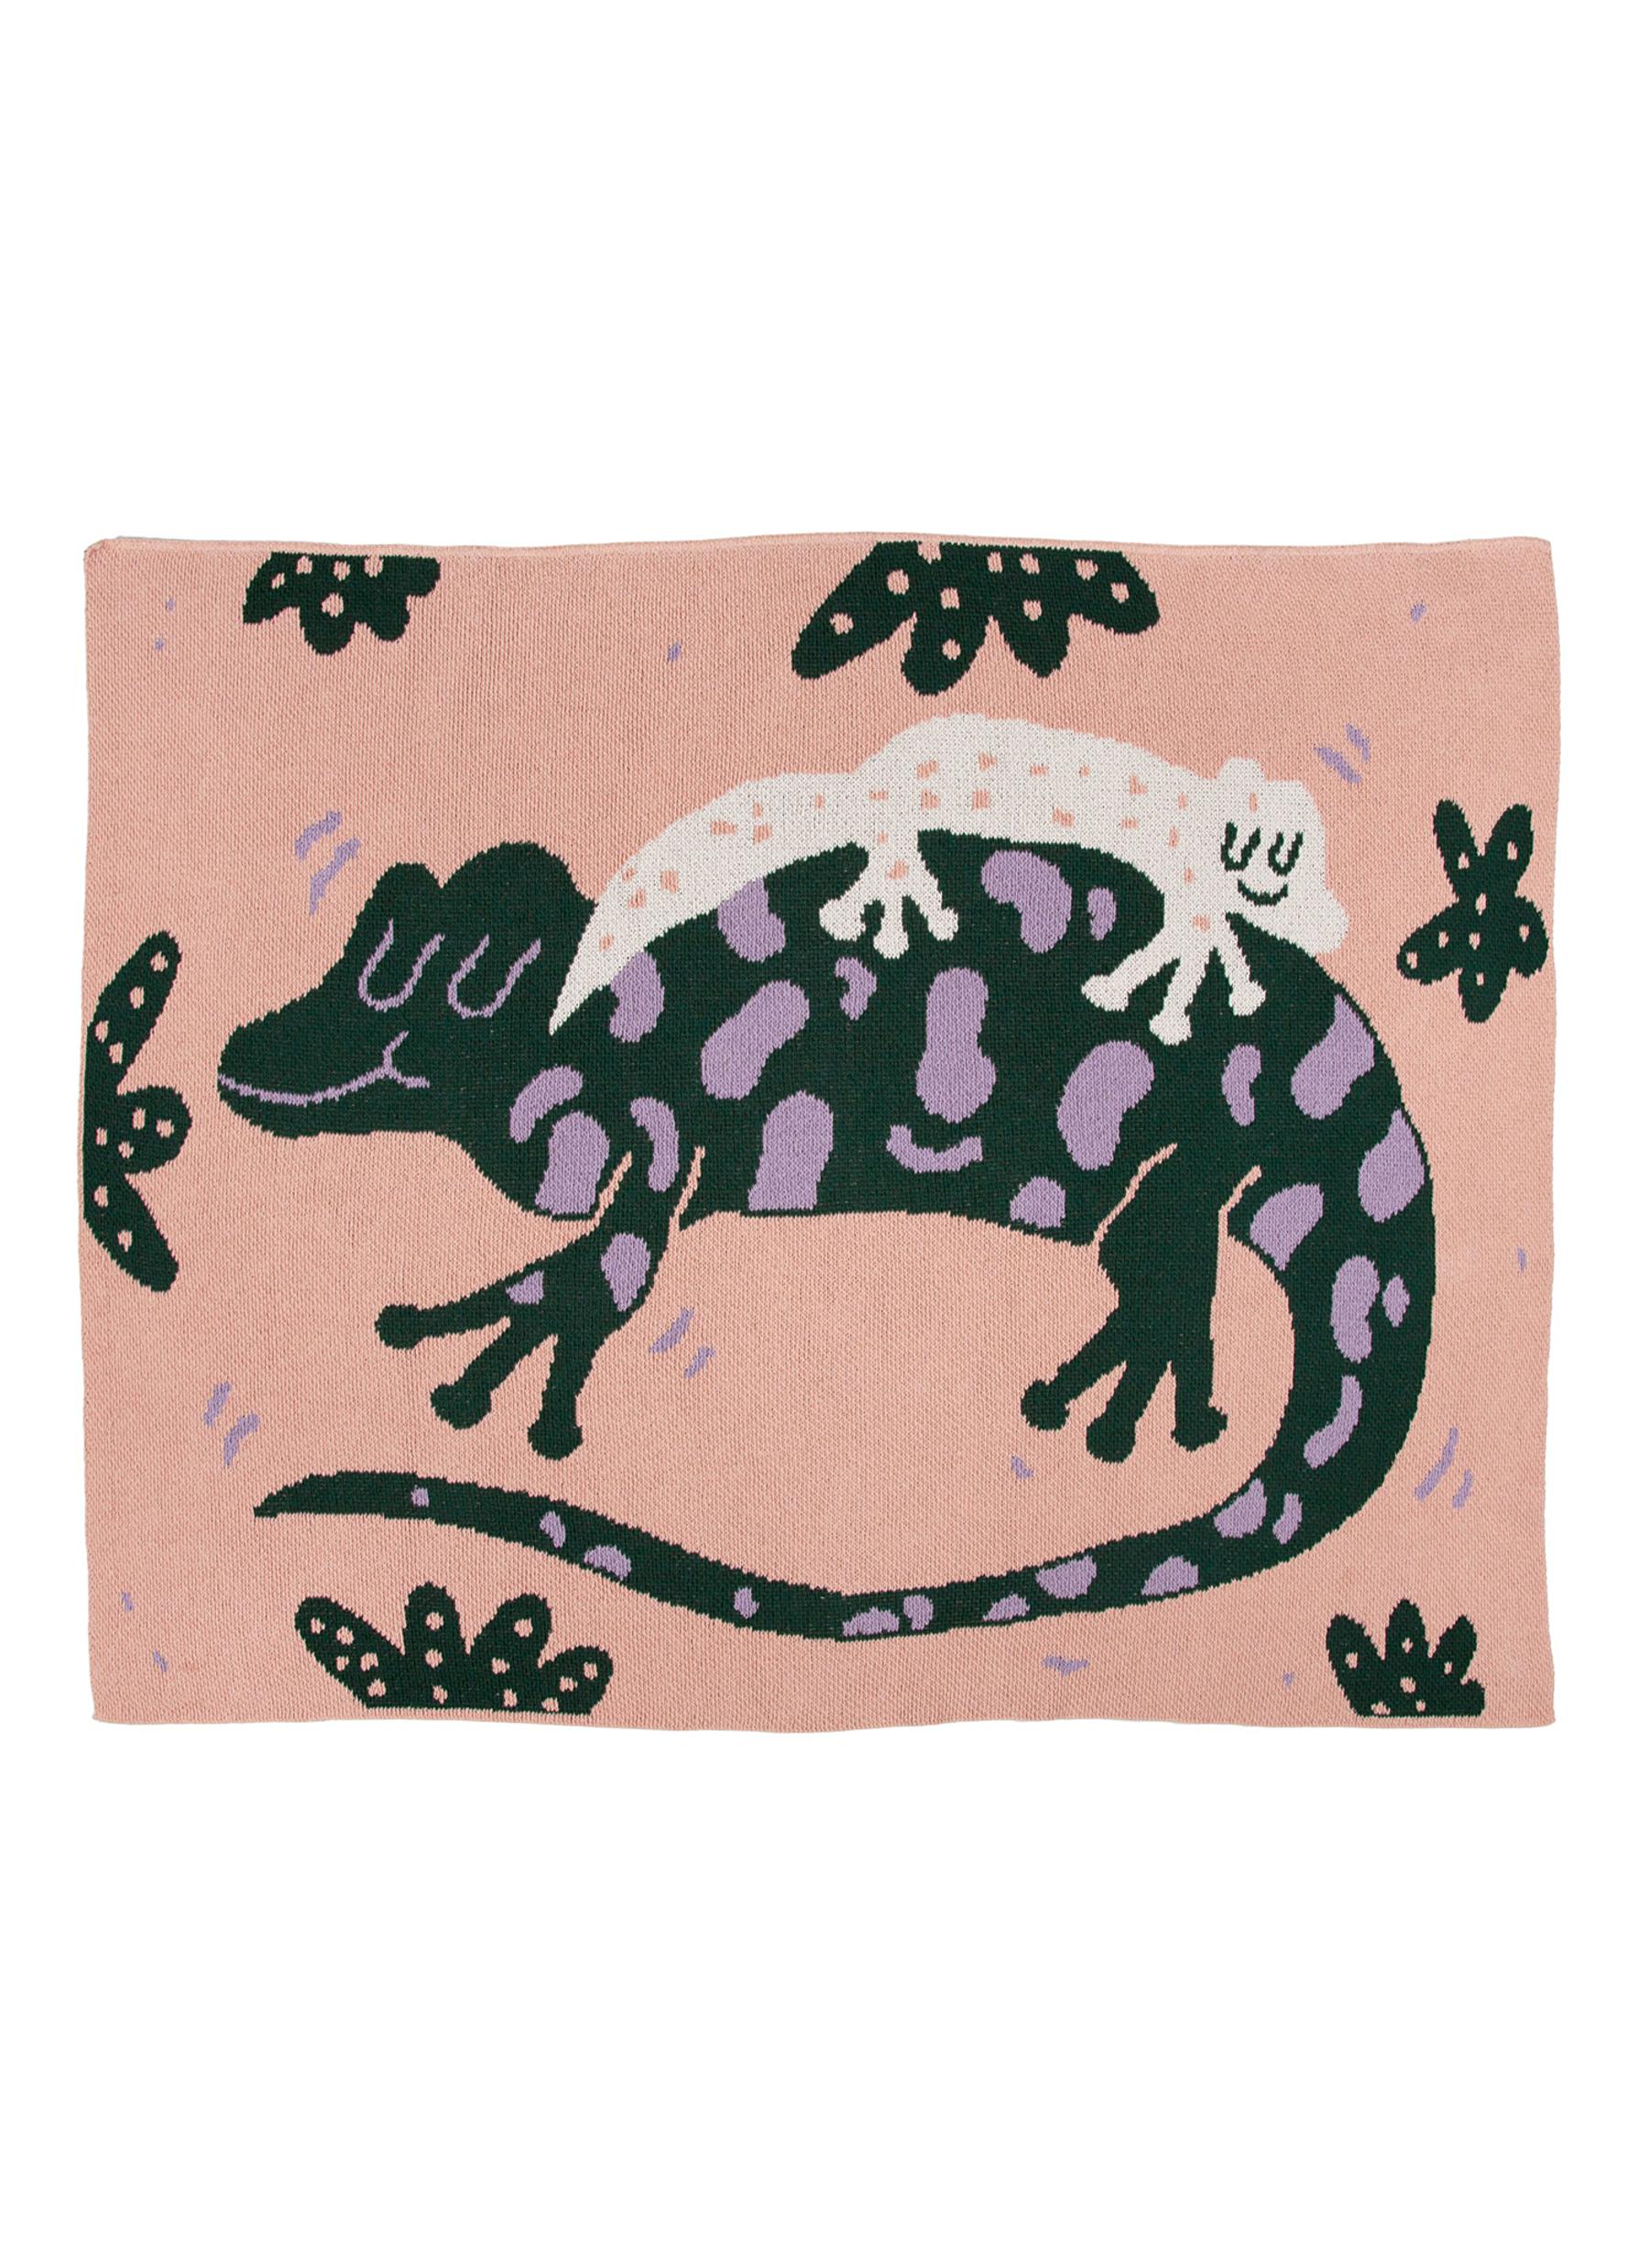 X Aga Giecko â€˜Lounge Lizards’ Mini Blanket